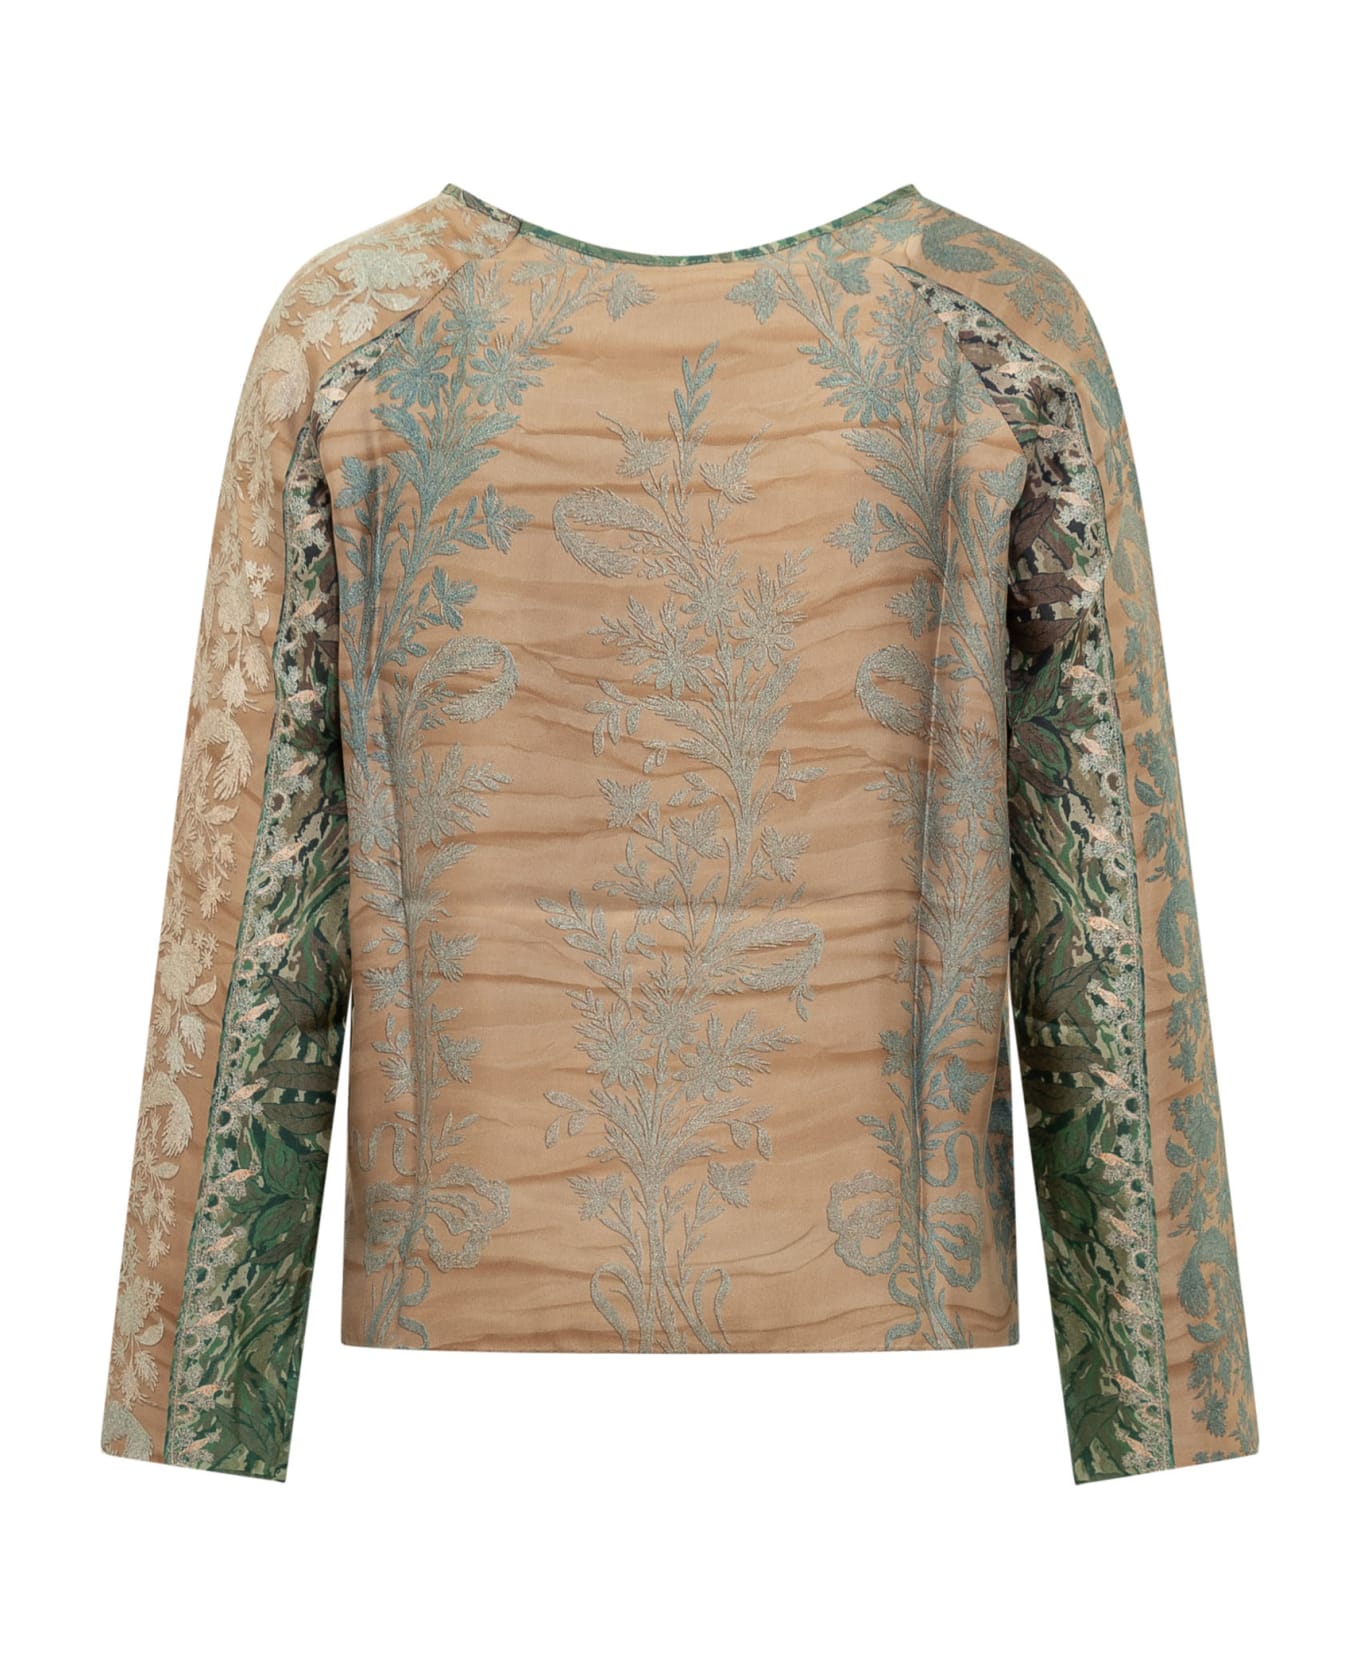 Pierre-Louis Mascia Silk Blouse With Floral Pattern - CIPRIA AZZURRO